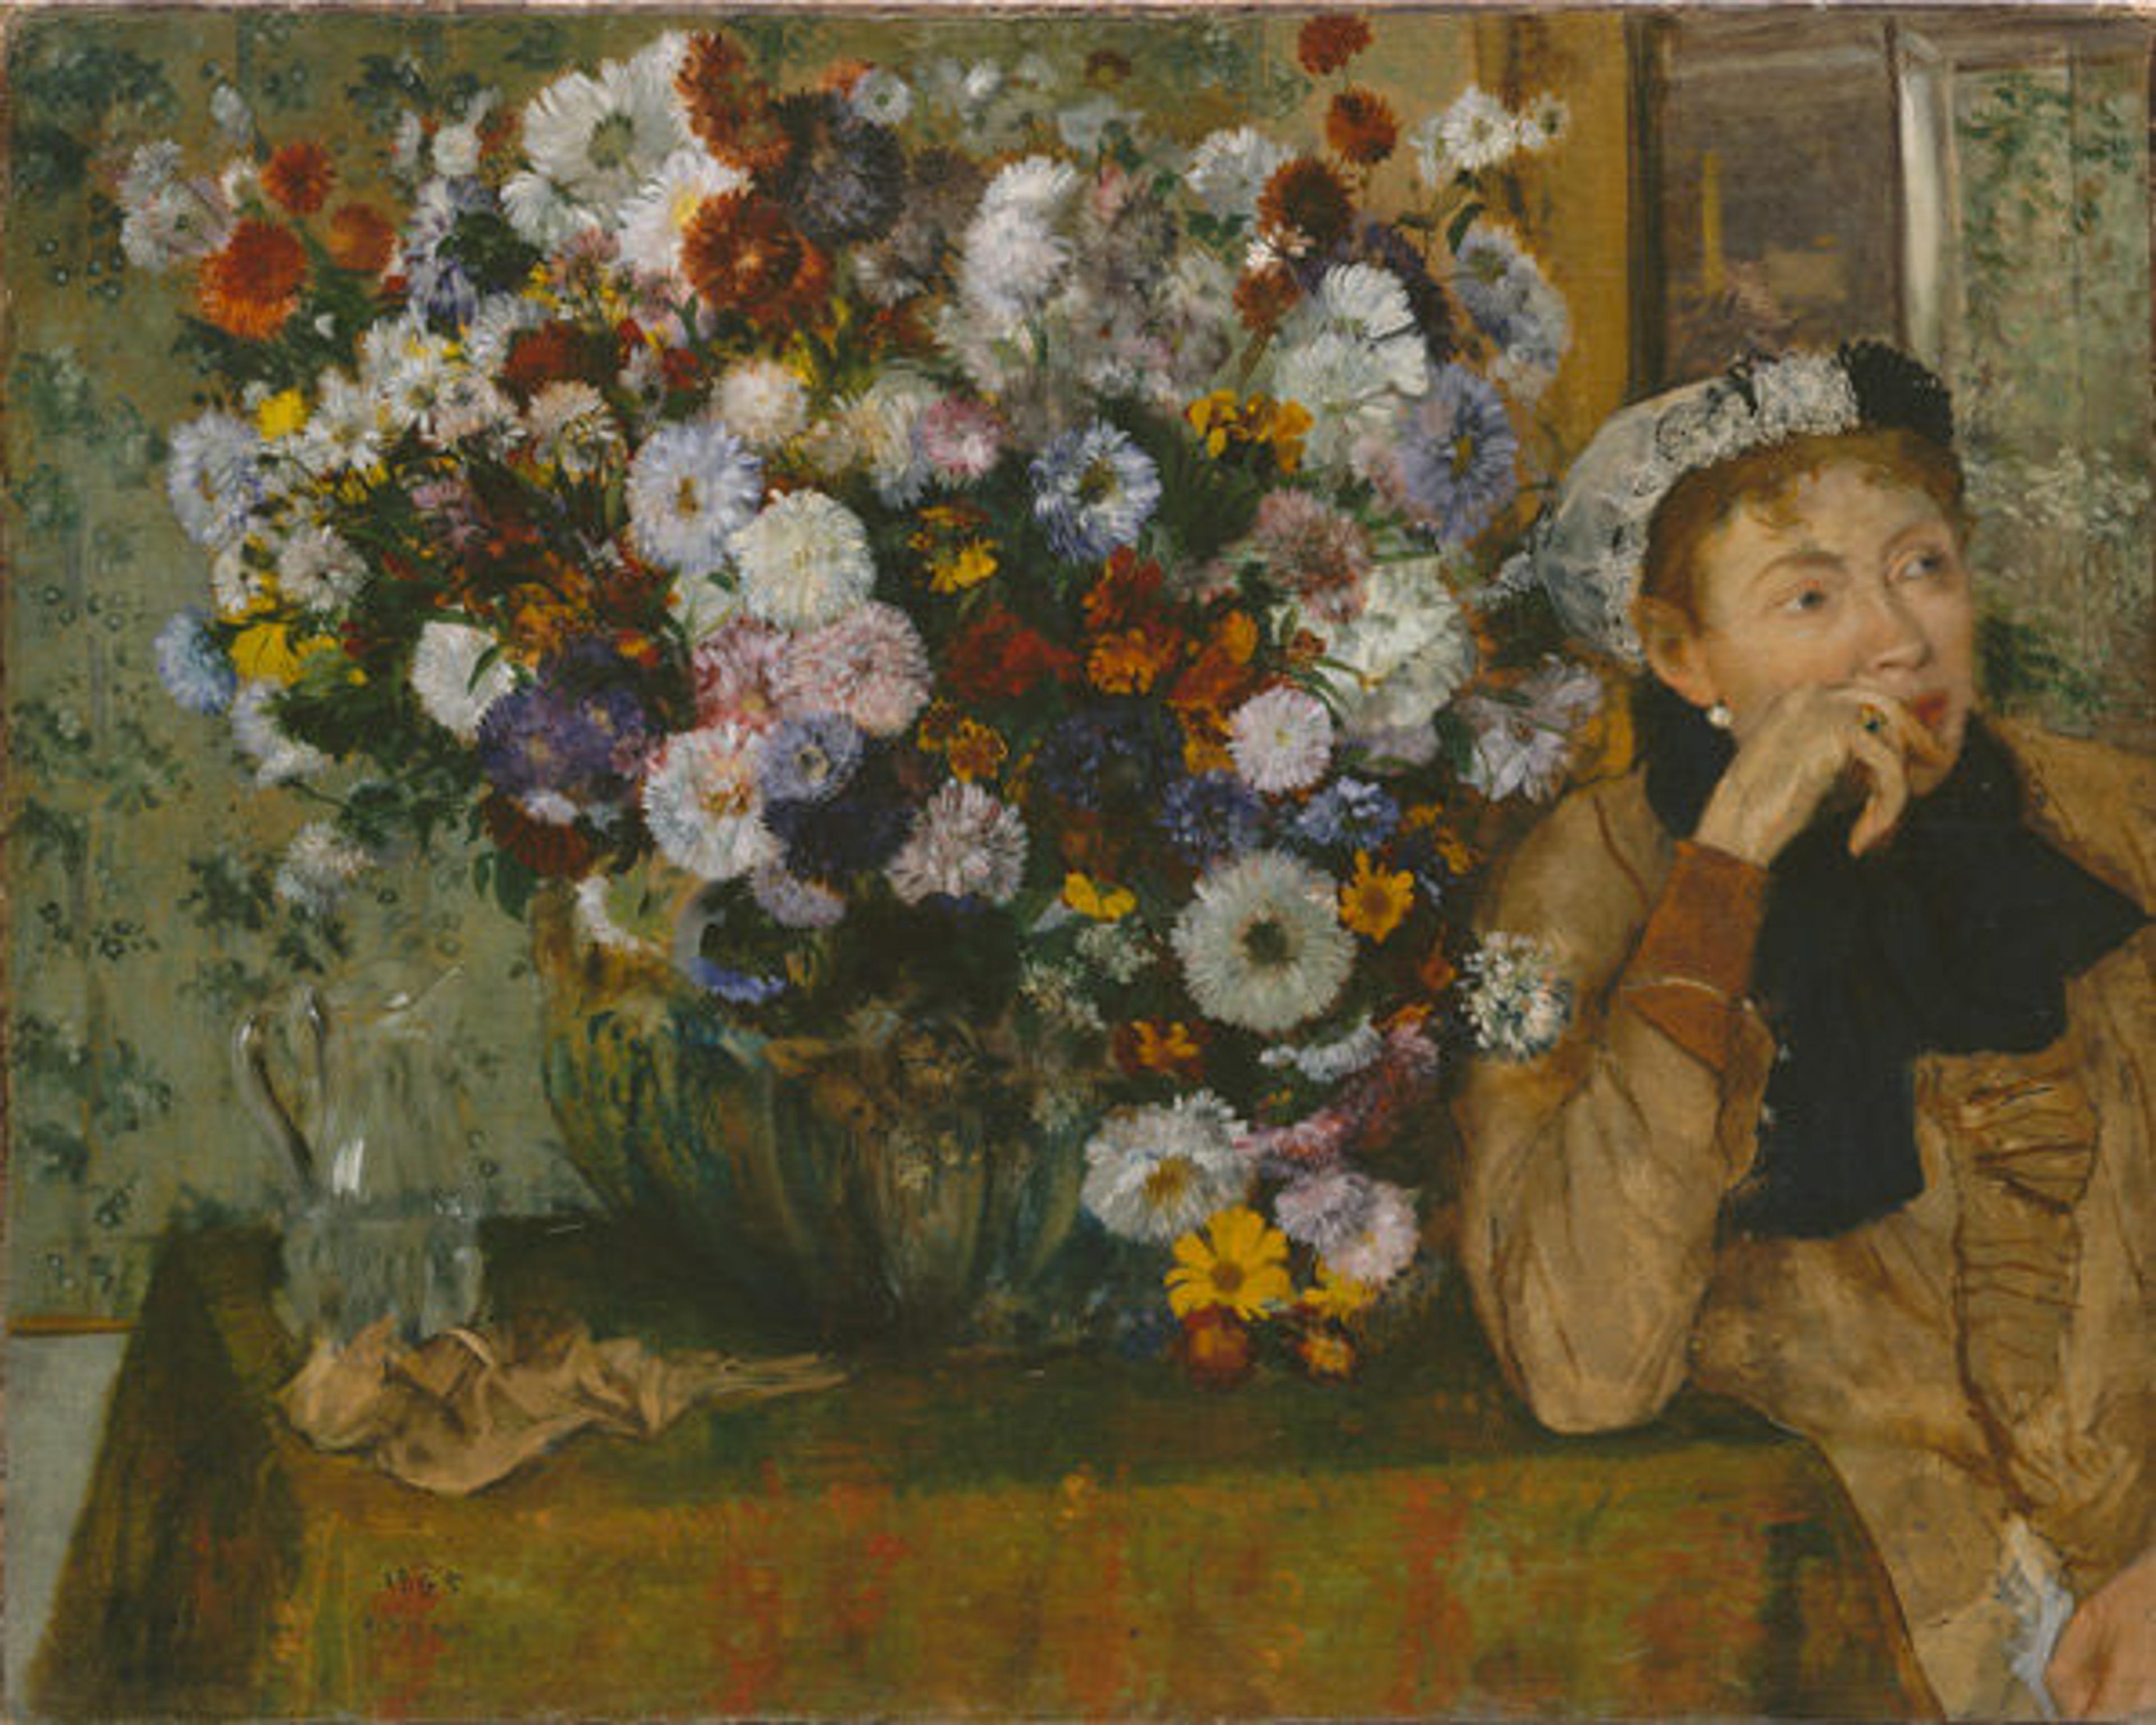 Edward Degas. A Woman Seated beside a Vase of Flowers (Madame Paul Valpinçon?), 1865